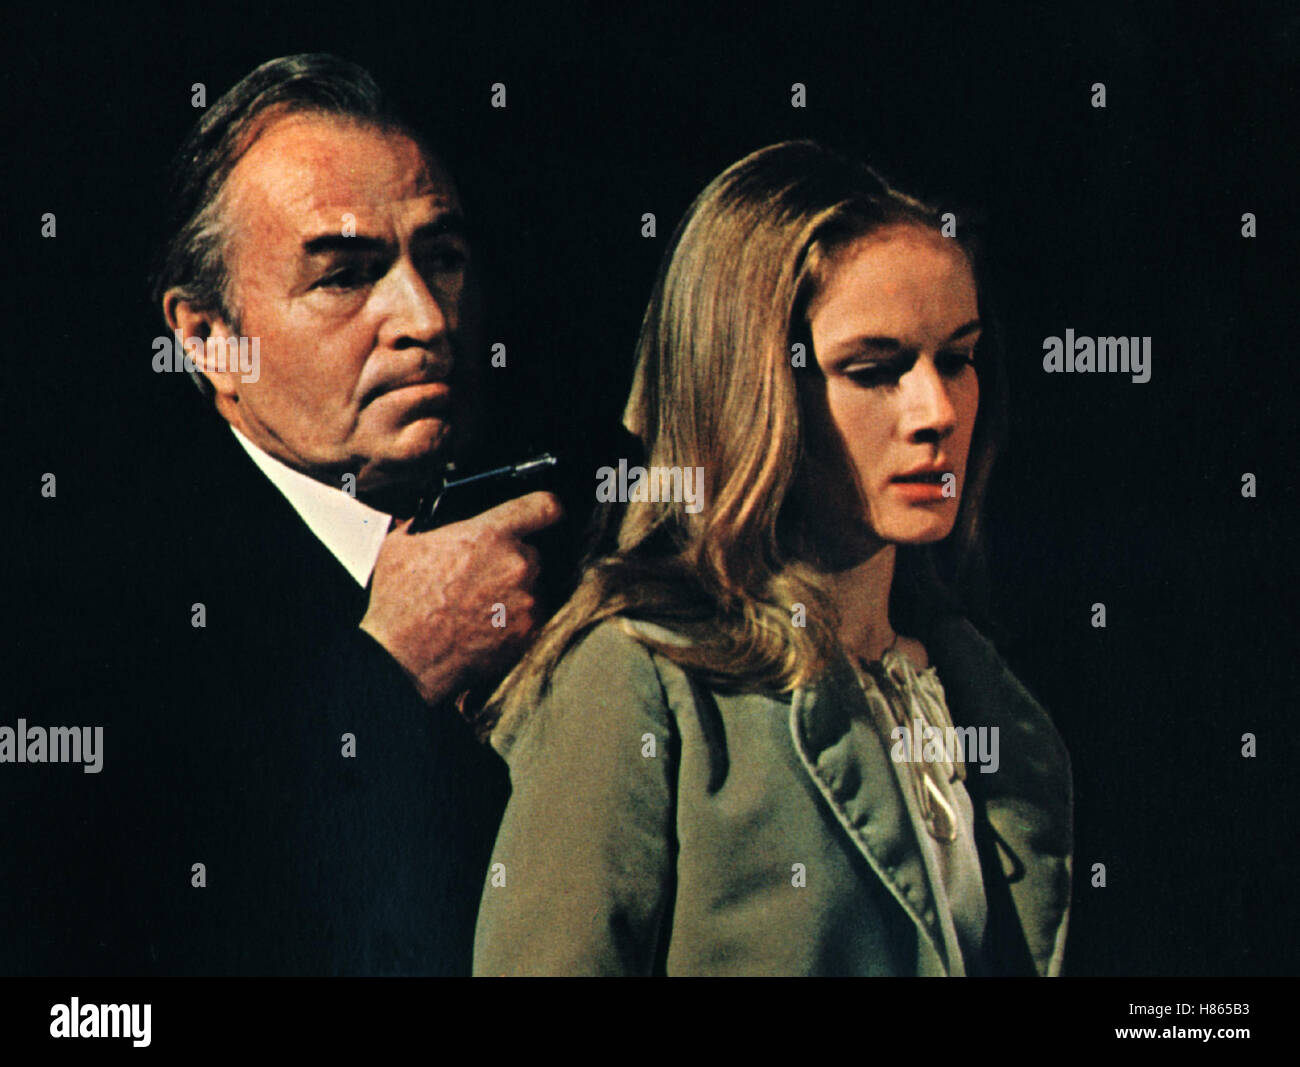 Der Mackintosh-Mann, (THE MACKINTOSH MAN) USA 1973, Regie: John Huston, JAMES MASON, DOMINIQUE SANDA, Stichwort: Pistole, Revolver Stock Photo